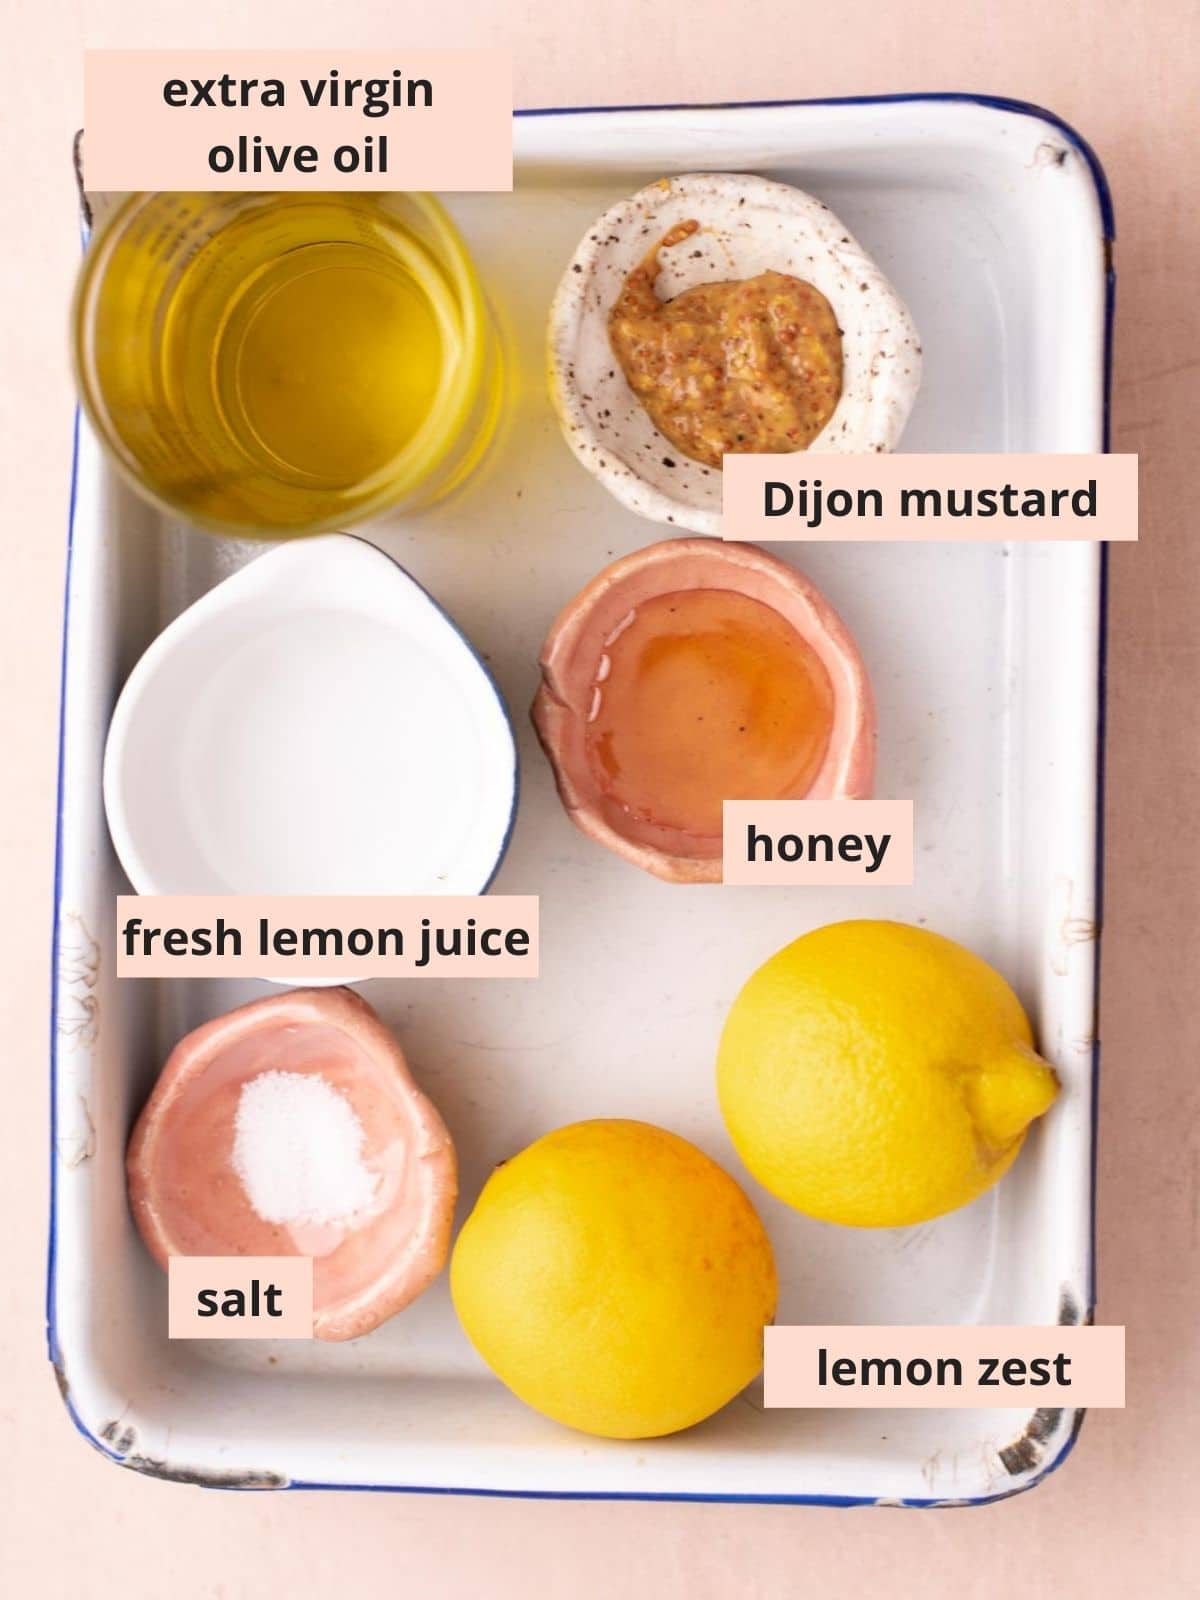 Labeled ingredients used to make lemon vinaigrette.